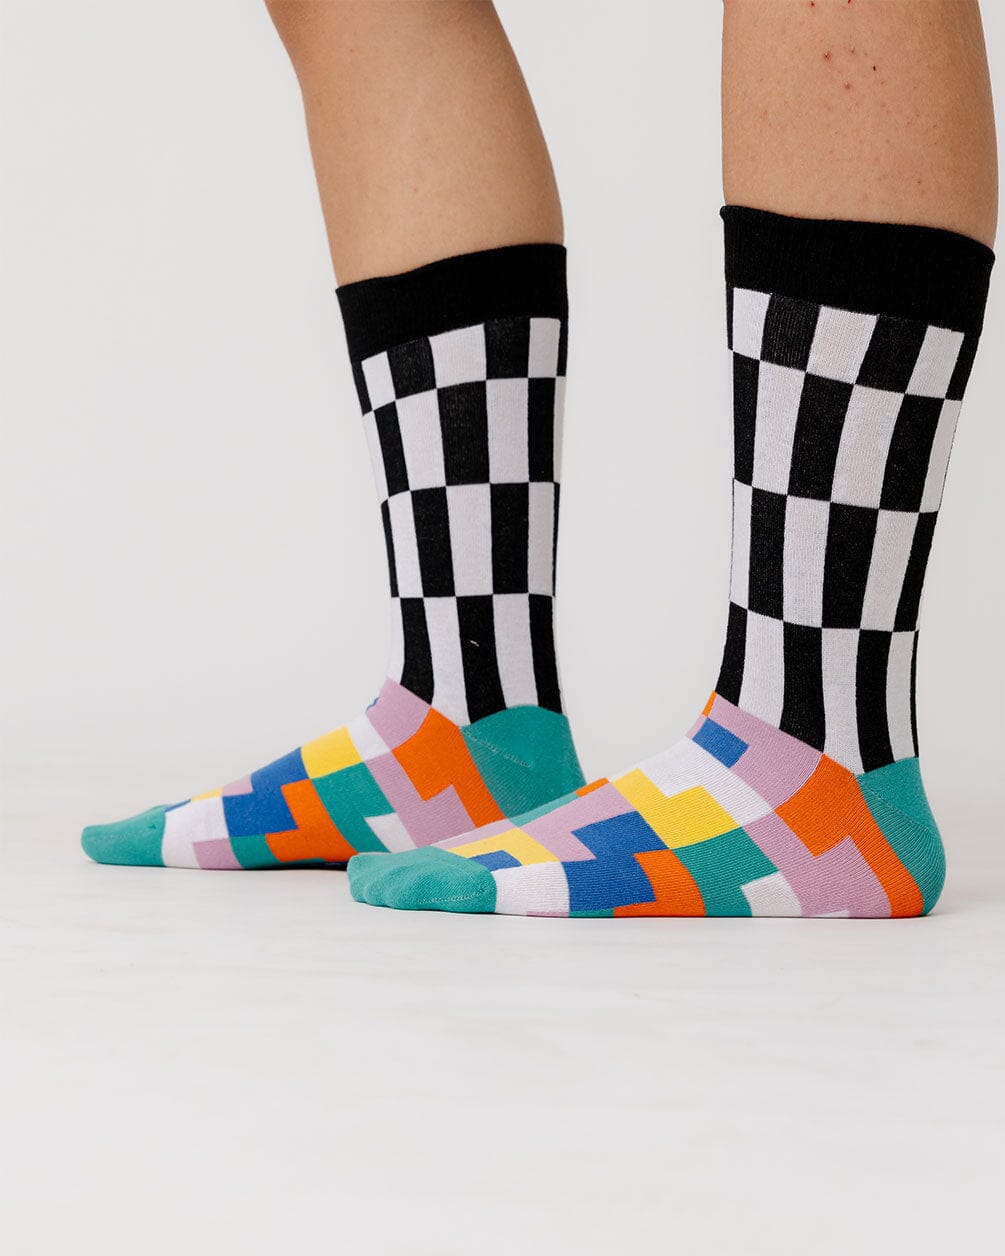 Checkered Pixels Neck Socks Neck Socks In Your Shoe 